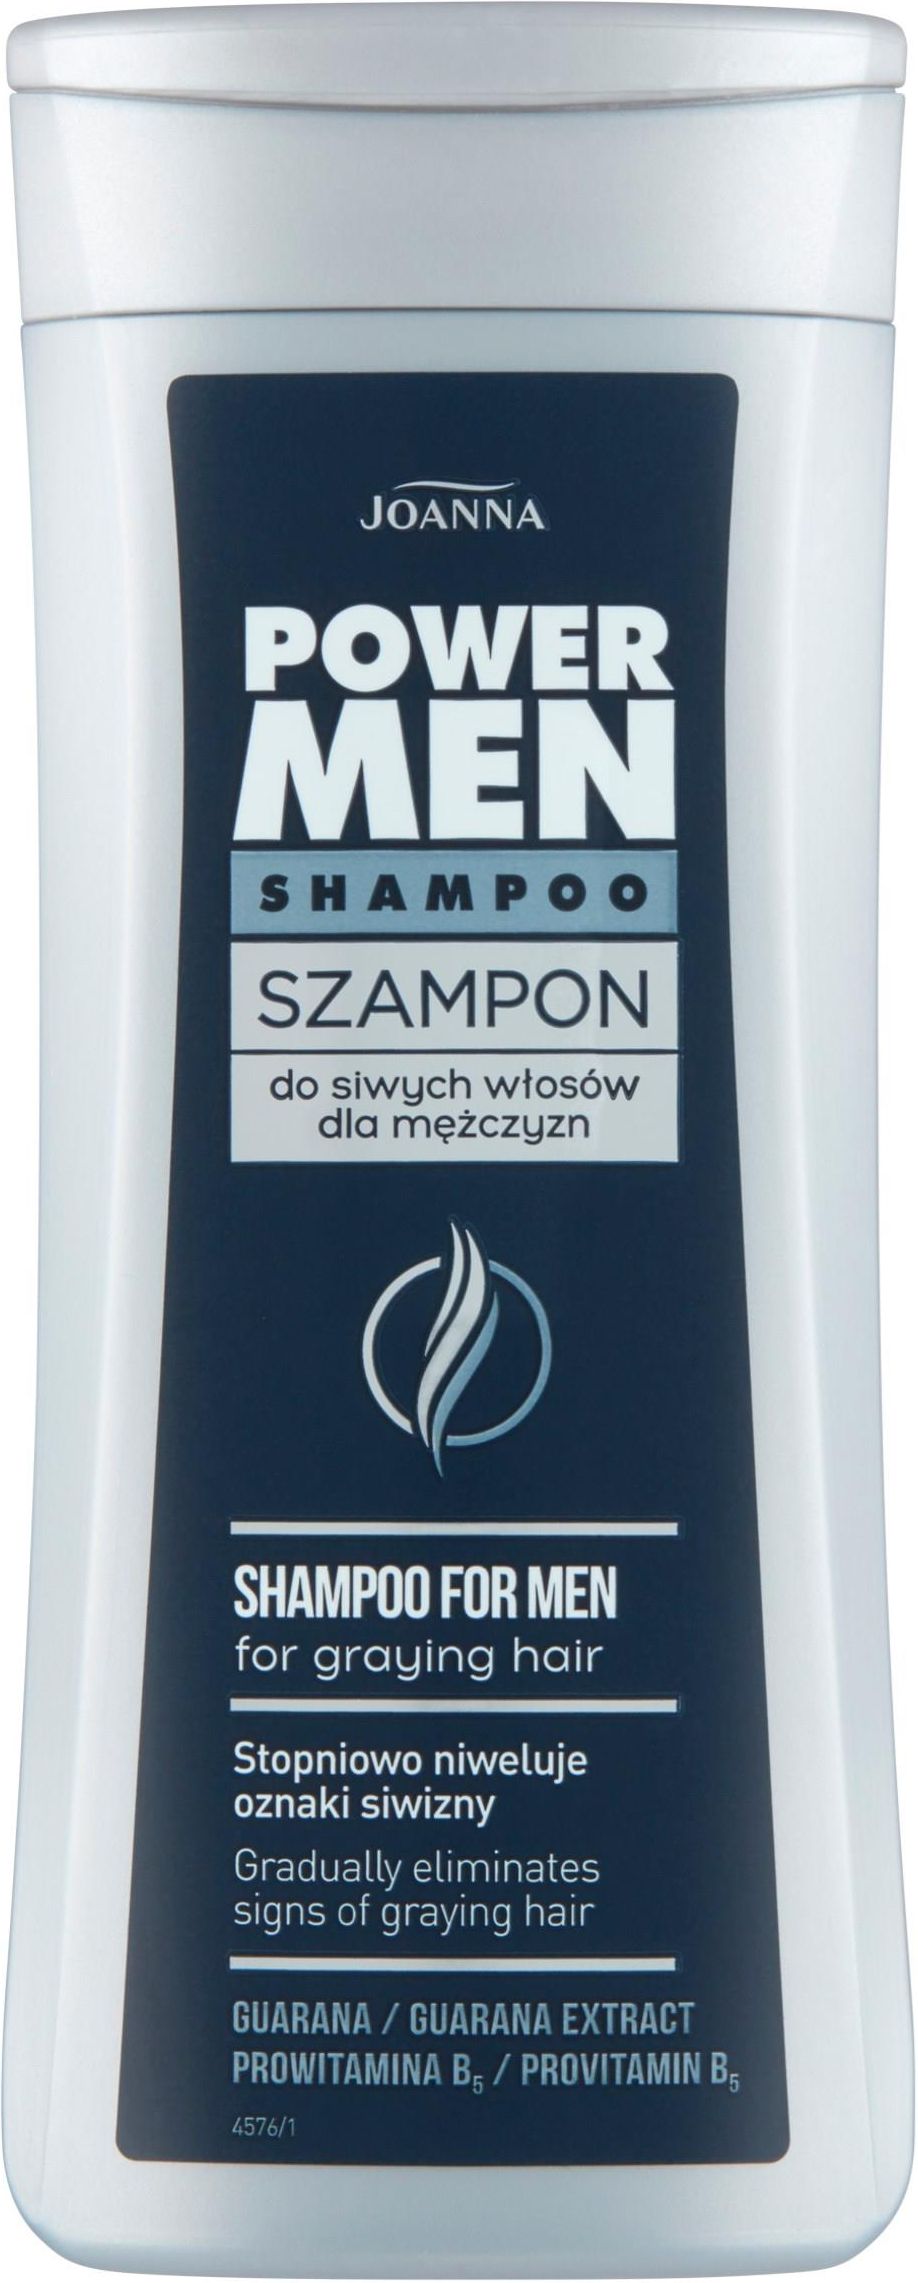 joanna szampon power hair wizaz